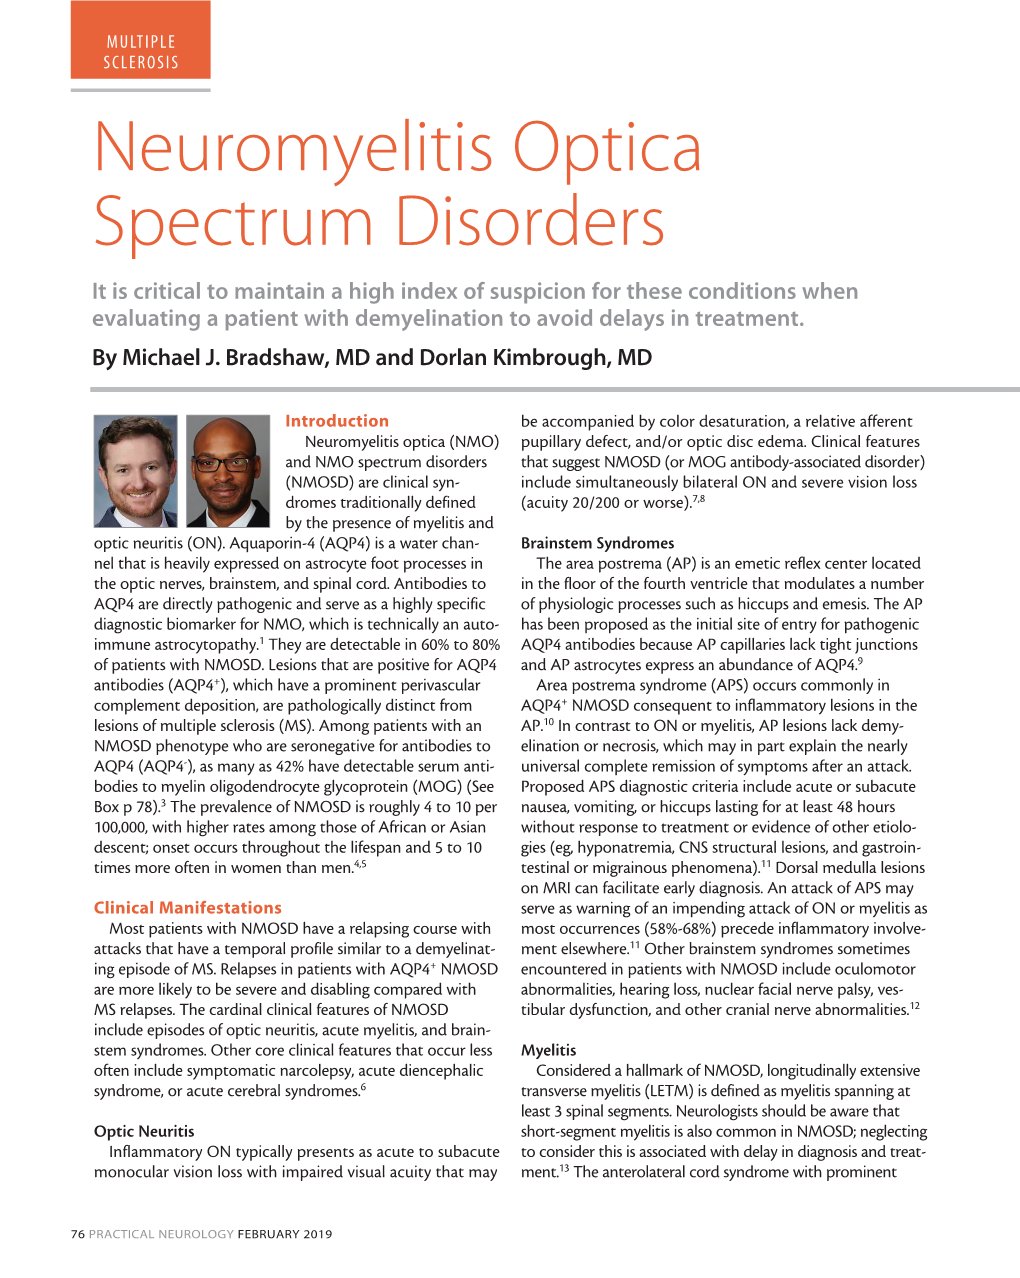 Neuromyelitis Optica Spectrum Disorders